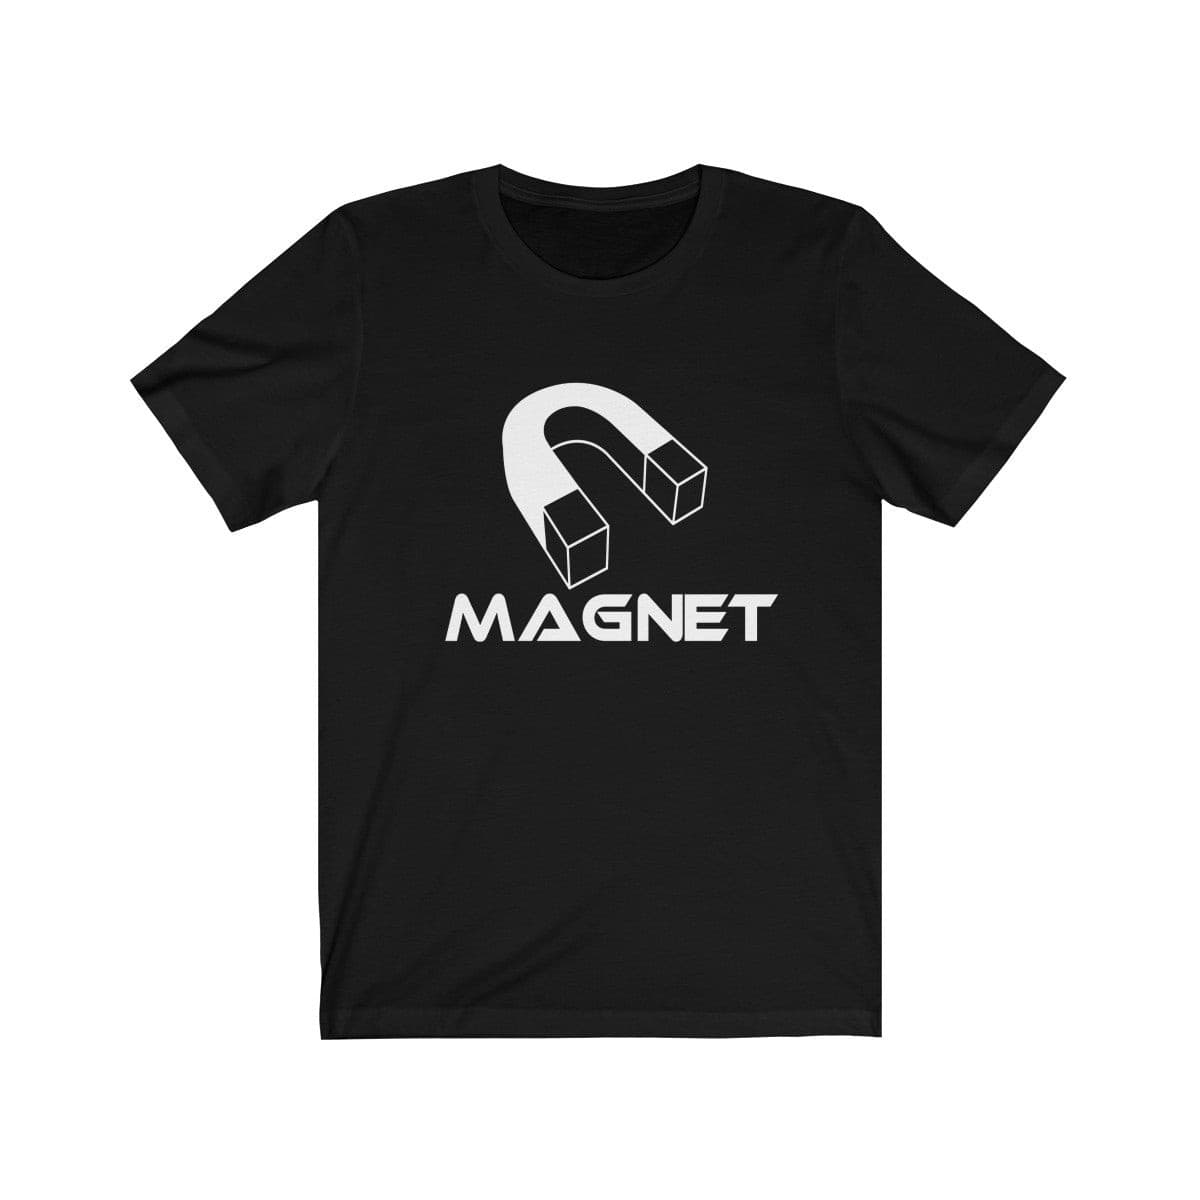 MAGNET Unisex It's yours Short Sleeve Tee.